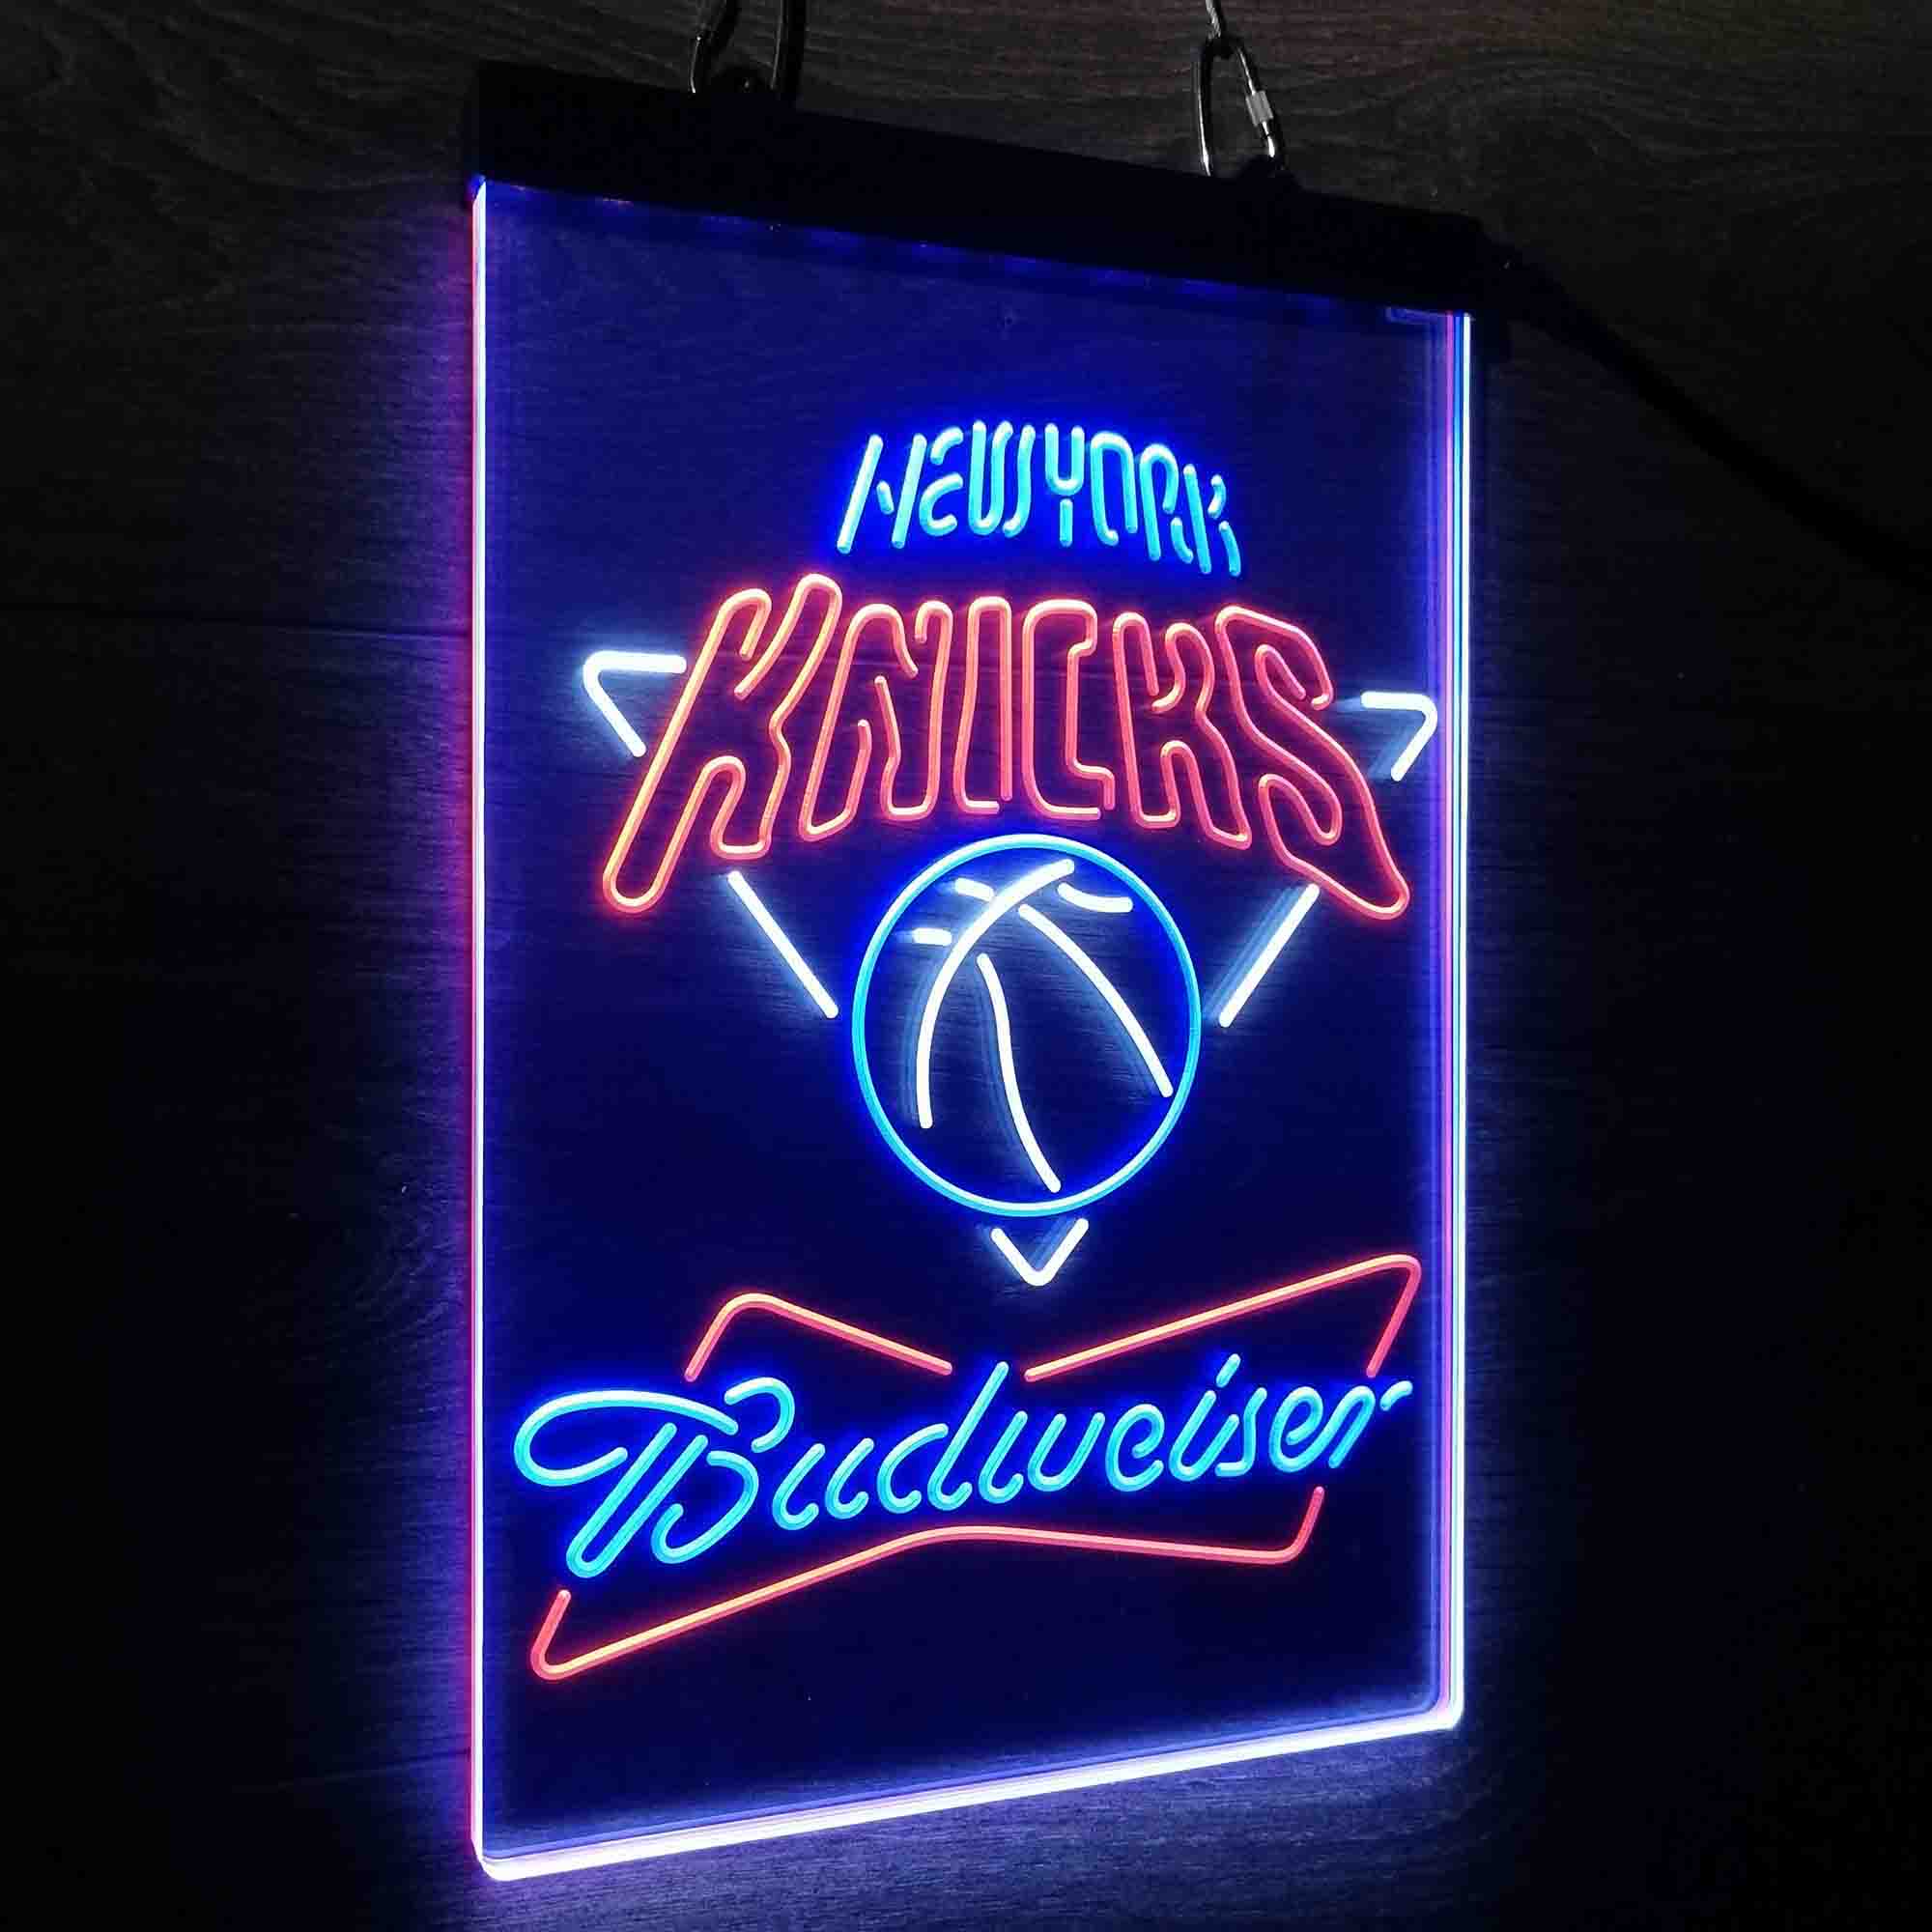 New York Knicks Nba Budweiser Neon LED Sign 3 Colors